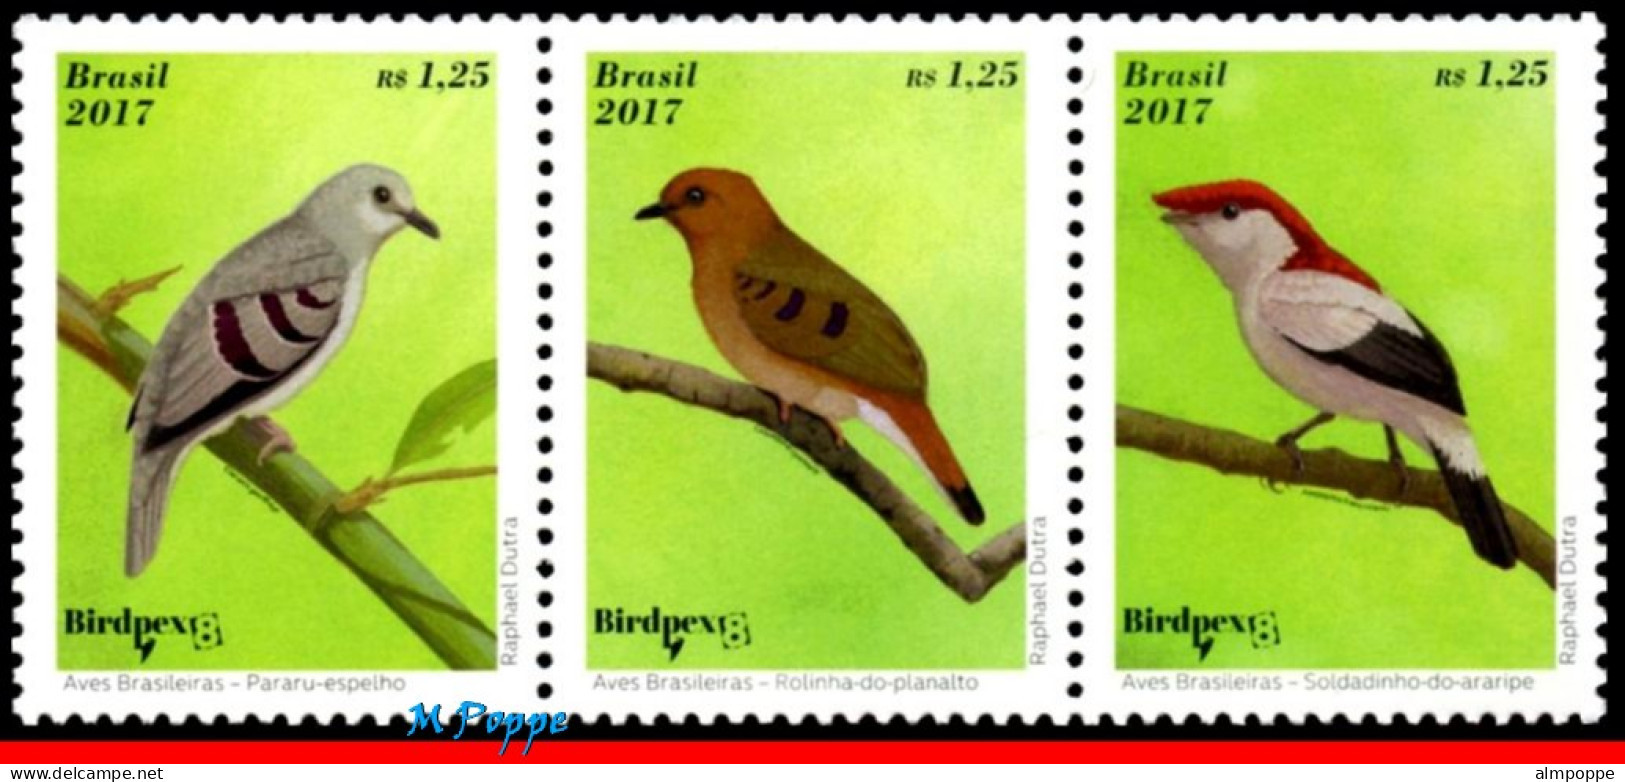 Ref. BR-V2017-04-4 BRAZIL 2017 - BRAZILIAN BIRDS,BIRDPEX 8, ENDANGERED, SHEET MNH, BIRDS 15V - Blocks & Sheetlets